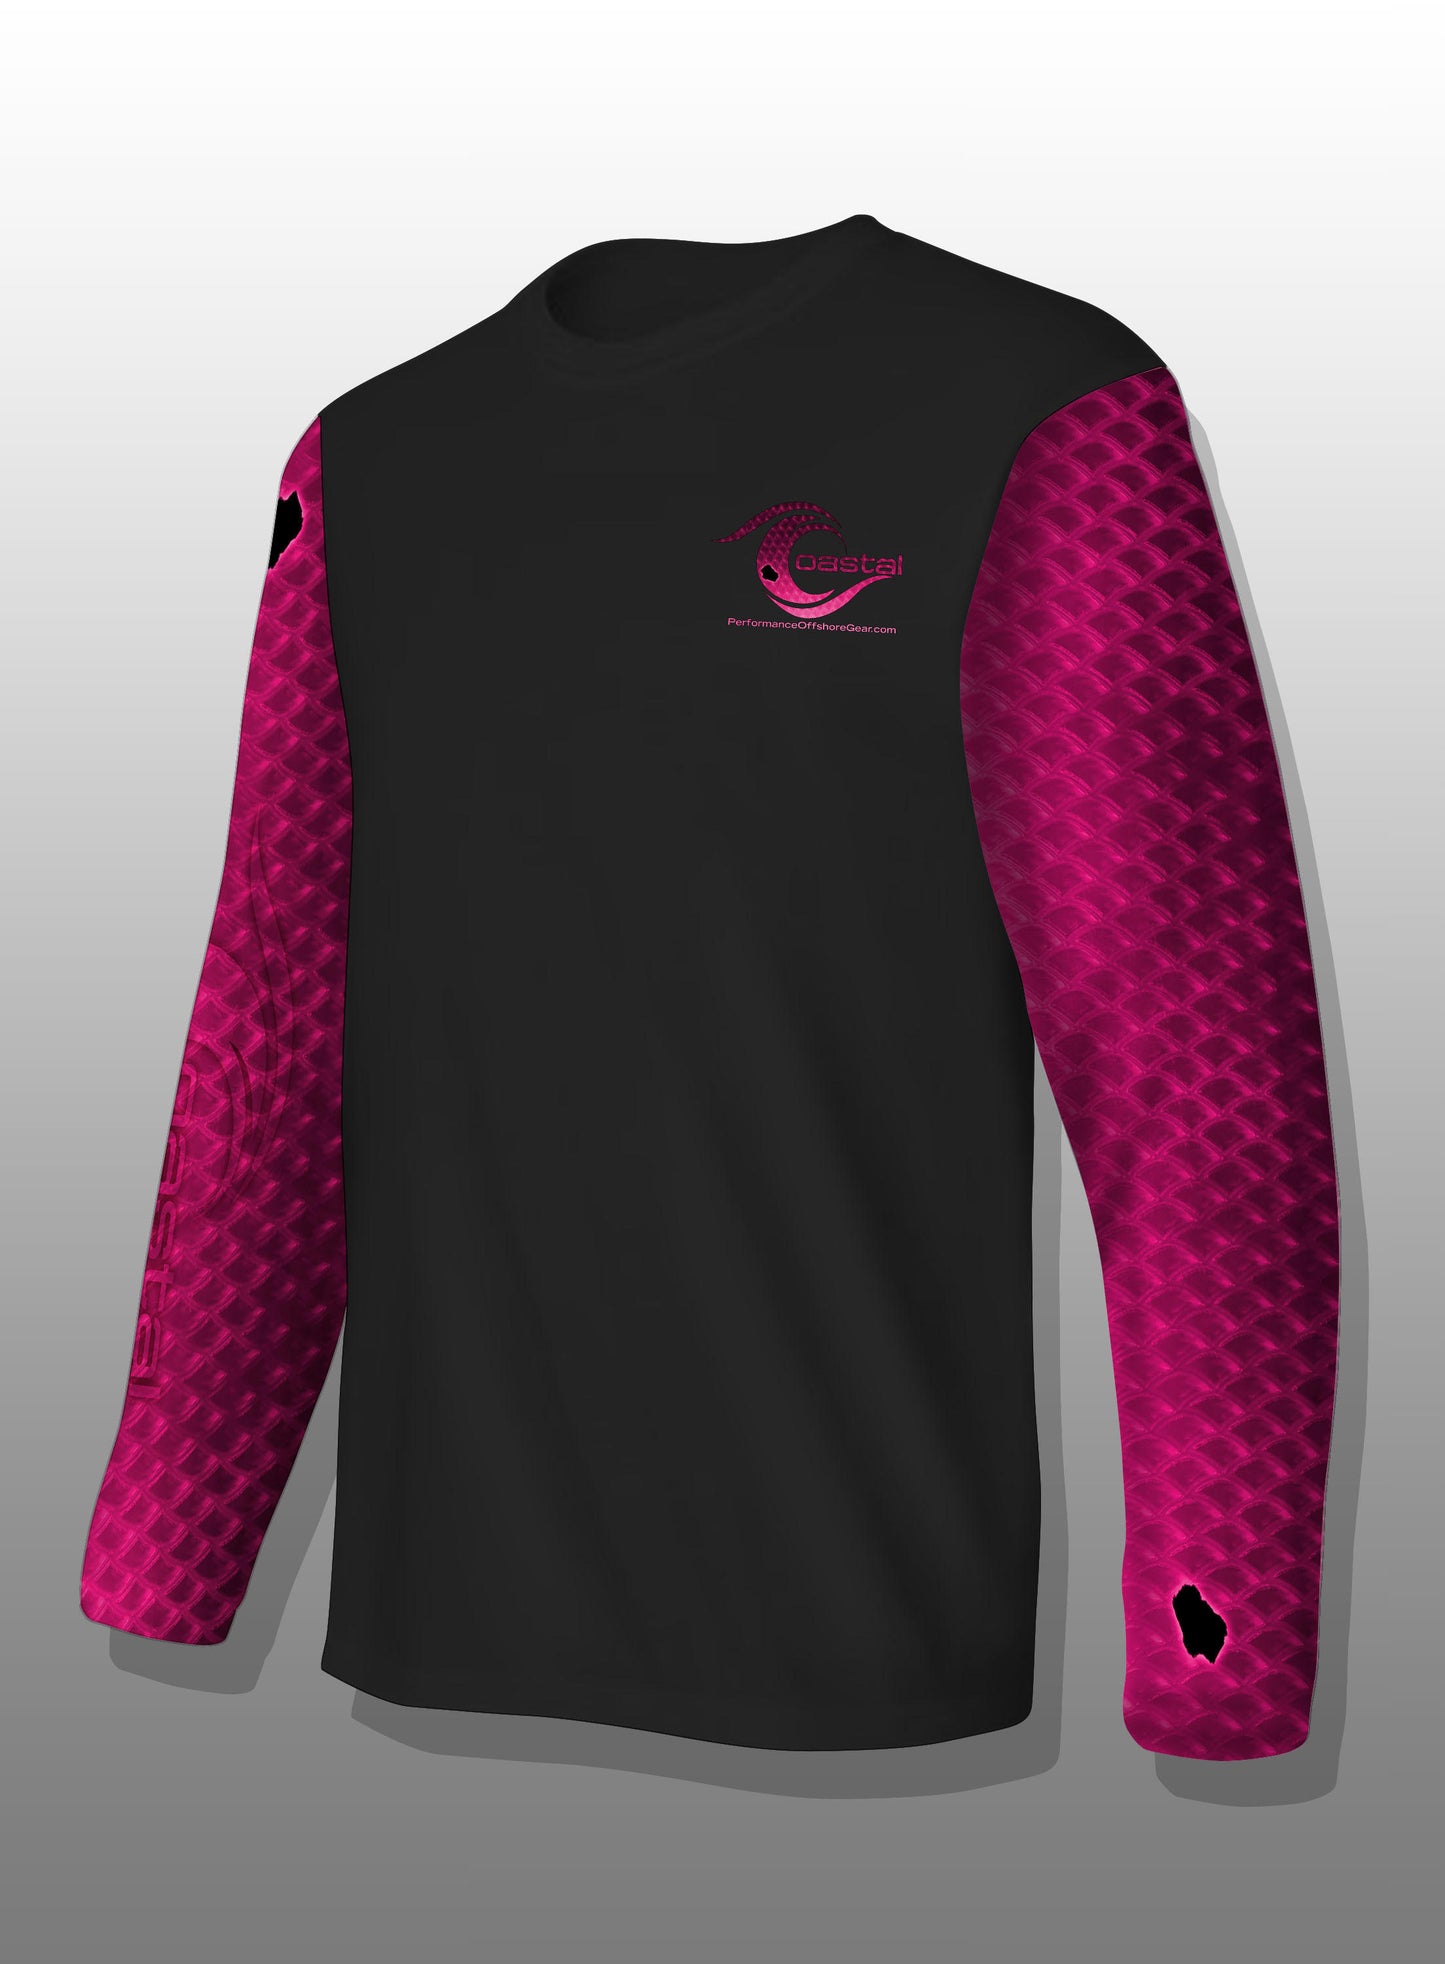 Bass Pro Shops Quarter Zip Long Sleeve Fishing Jersey 3T Bright Pink